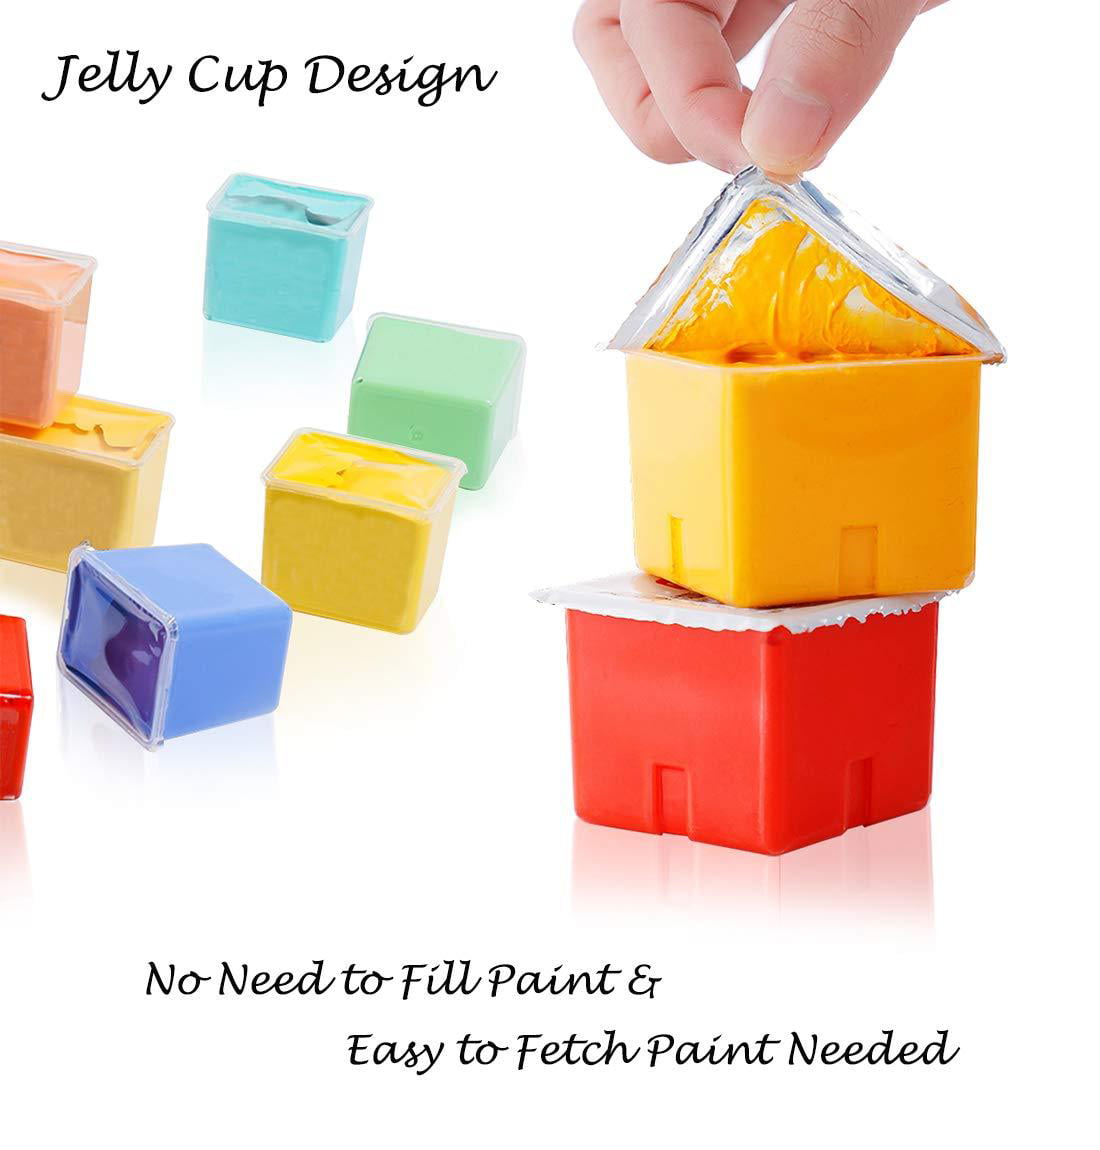 HIMI Gouache Paint Set 18/24 Colors x 30ml Unique Jelly Cup Design Wit –  AOOKMIYA